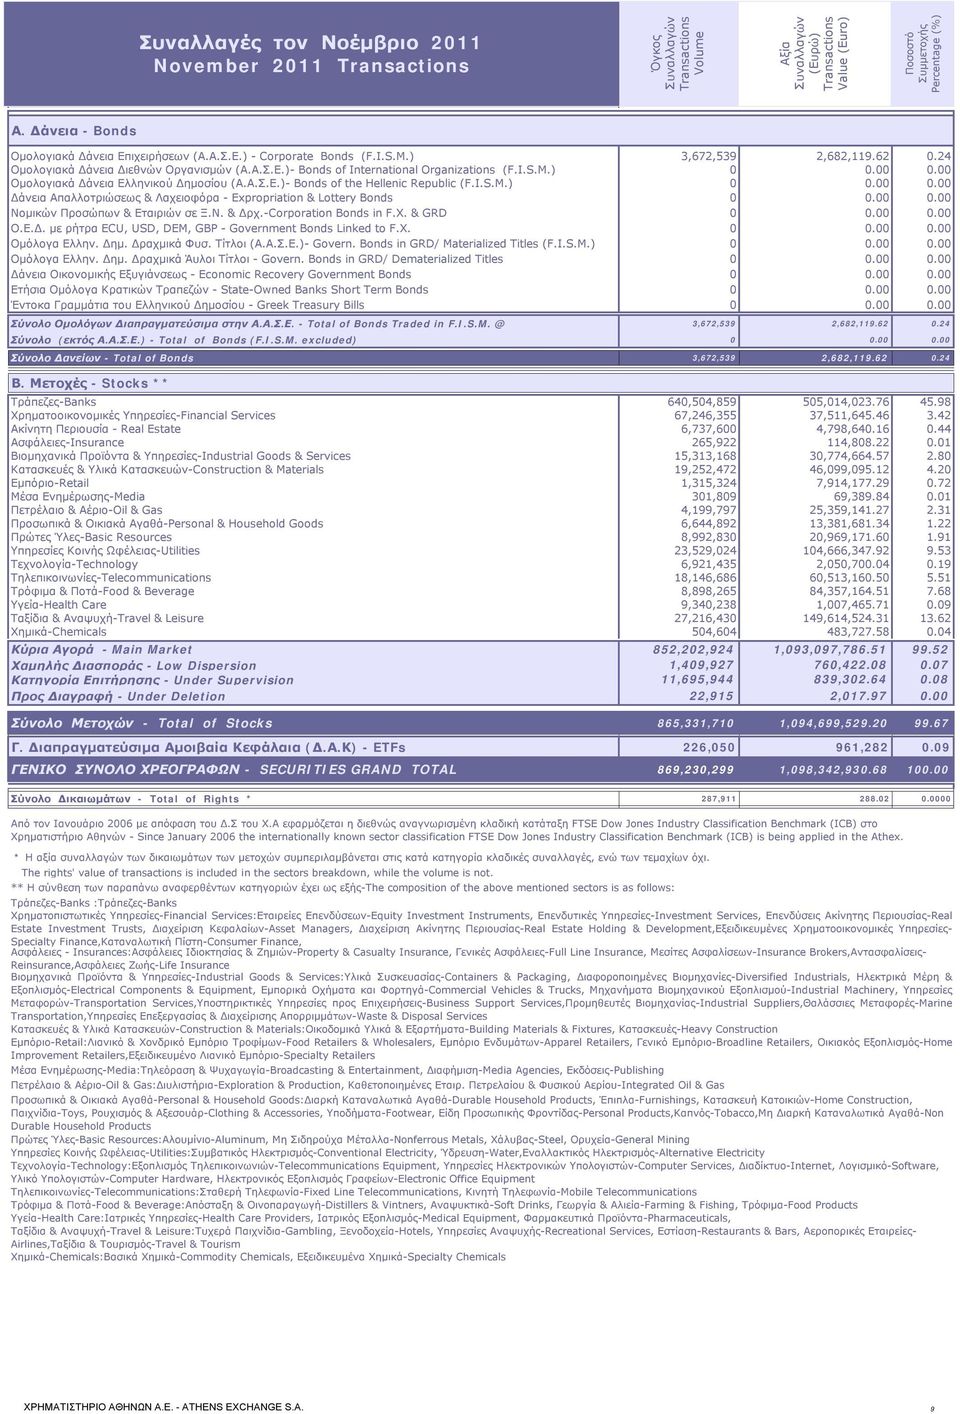 I.S.M.) 0 0.00 0.00 Ομολογιακά Δάνεια Ελληνικού Δημοσίου (Α.Α.Σ.Ε.)- Bonds of the Hellenic Republic (F.I.S.M.) 0 0.00 0.00 Δάνεια Απαλλοτριώσεως & Λαχειοφόρα - Expropriation & Lottery Bonds 0 0.00 0.00 Νομικών Προσώπων & Εταιριών σε Ξ.